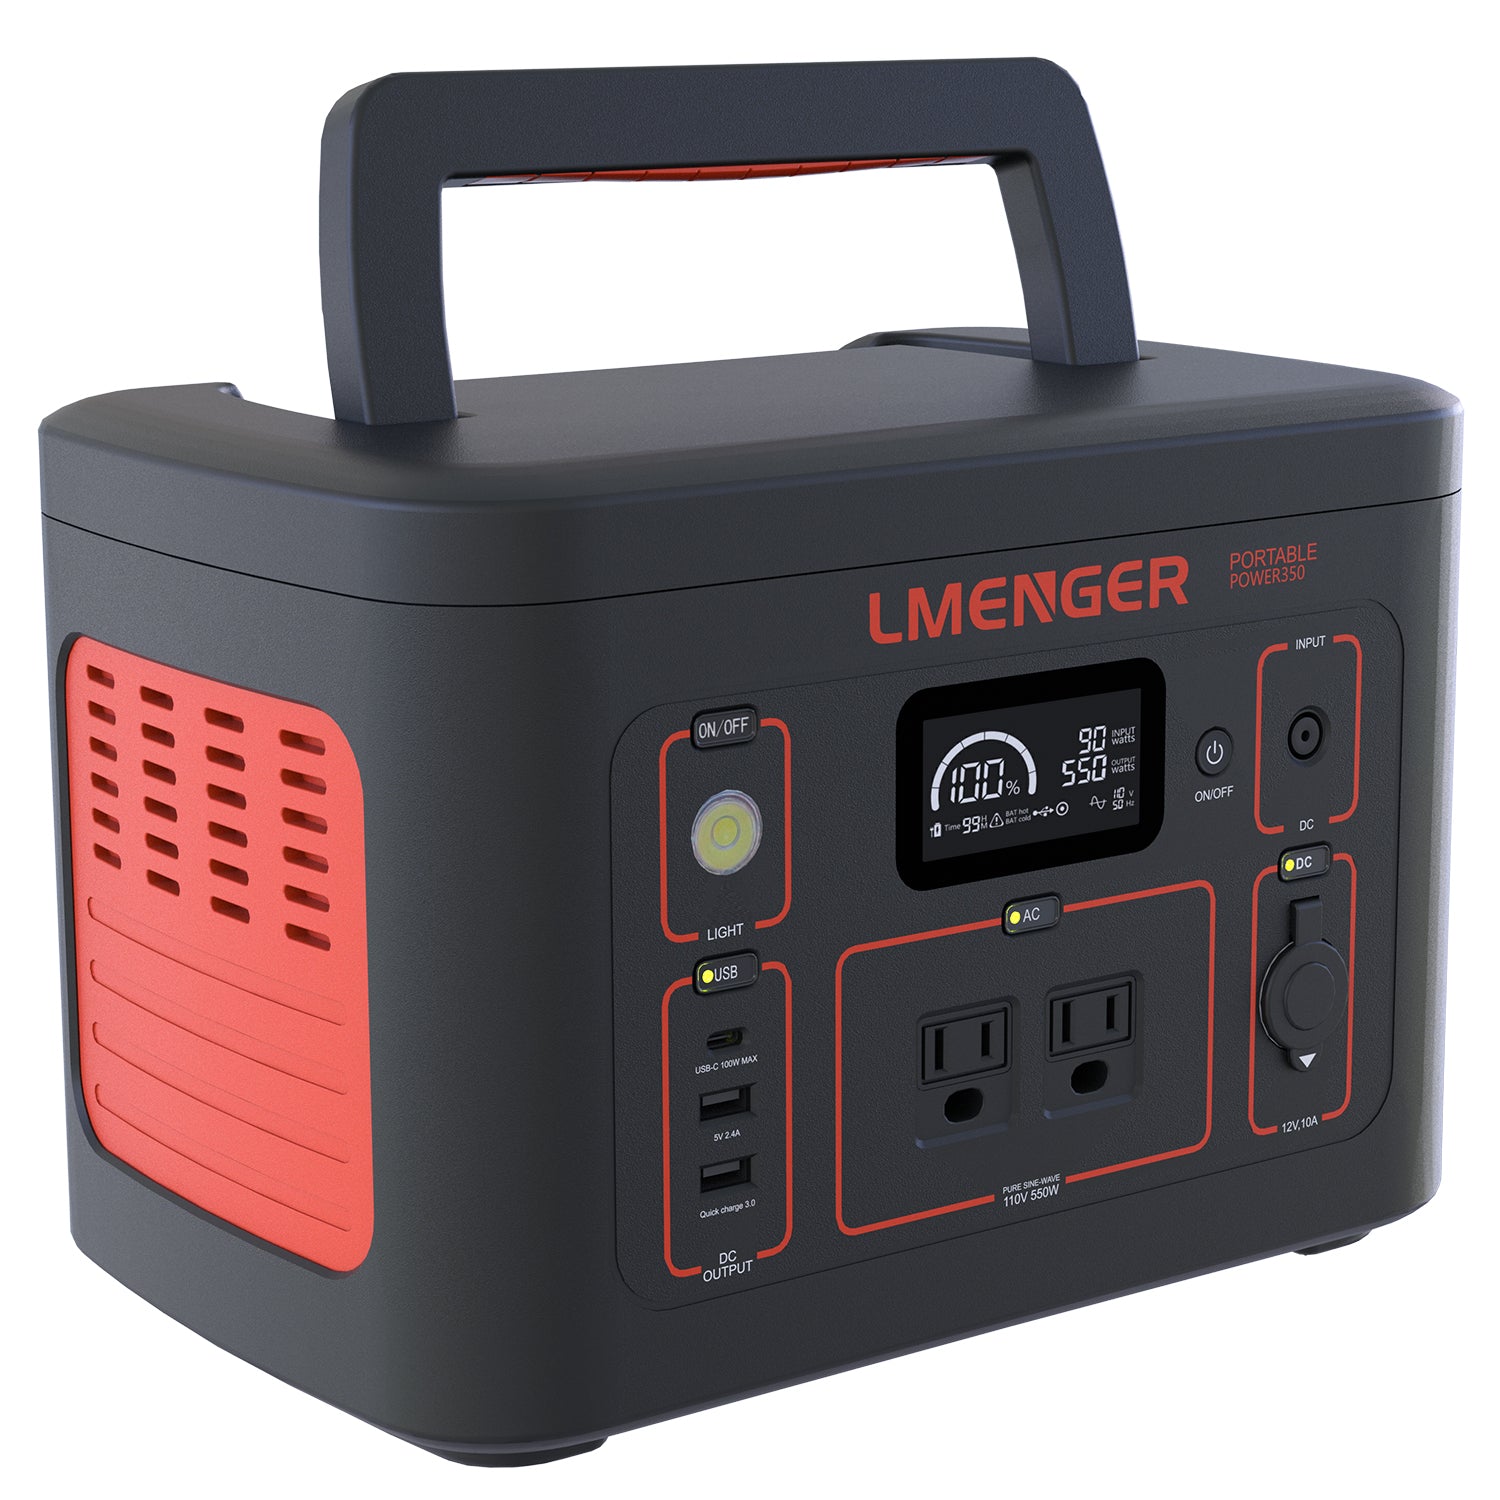 LMENGER K3 Portable Power Station 550W/326Wh